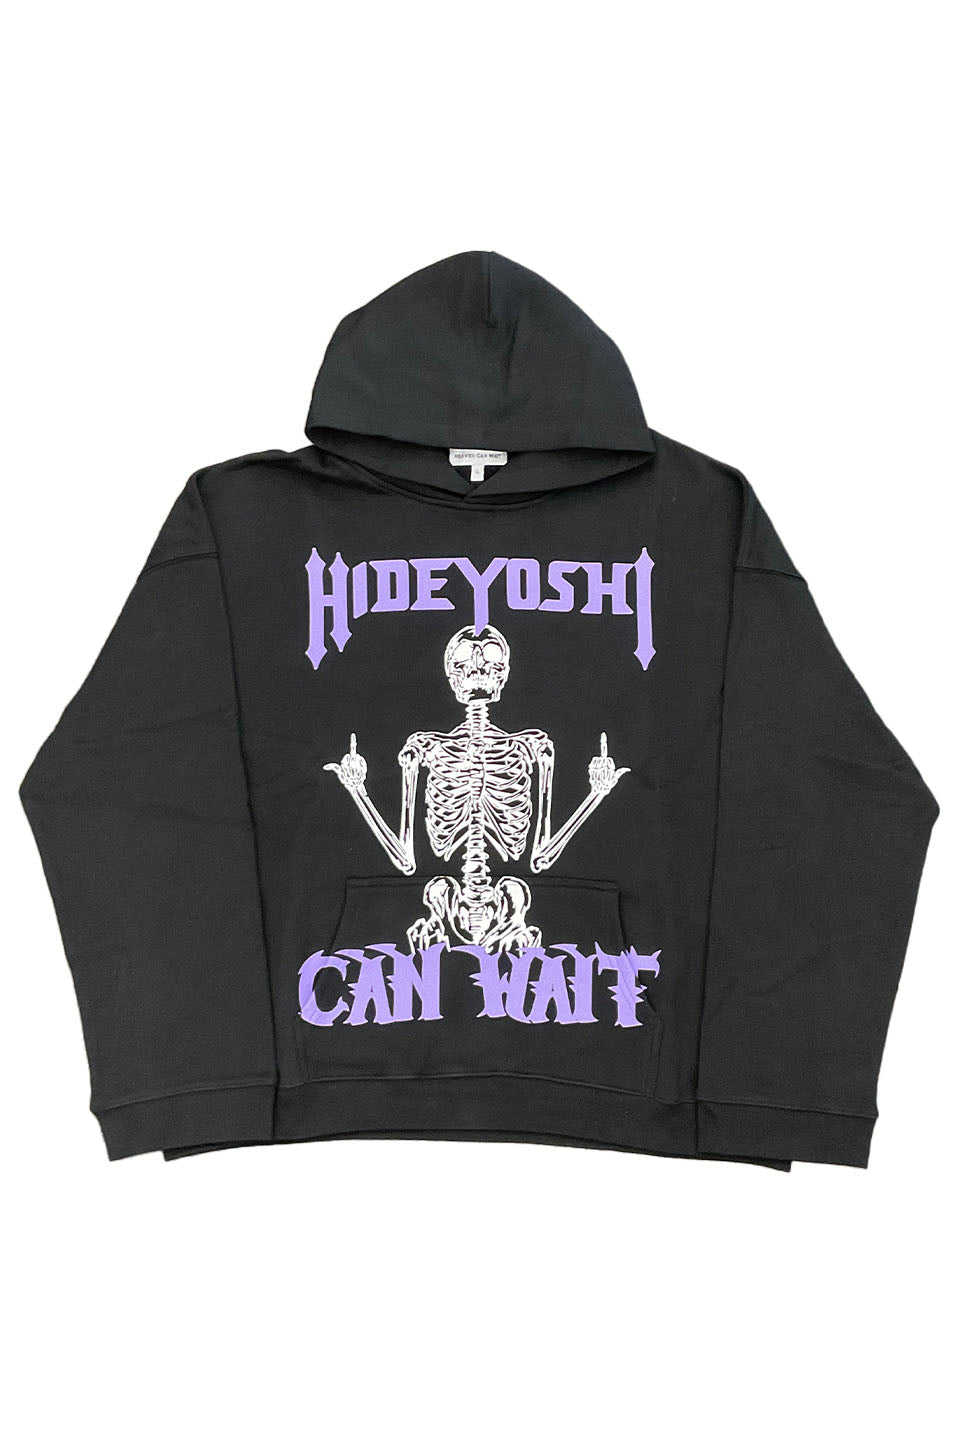 Hideyoshi X Hcw Hoodie